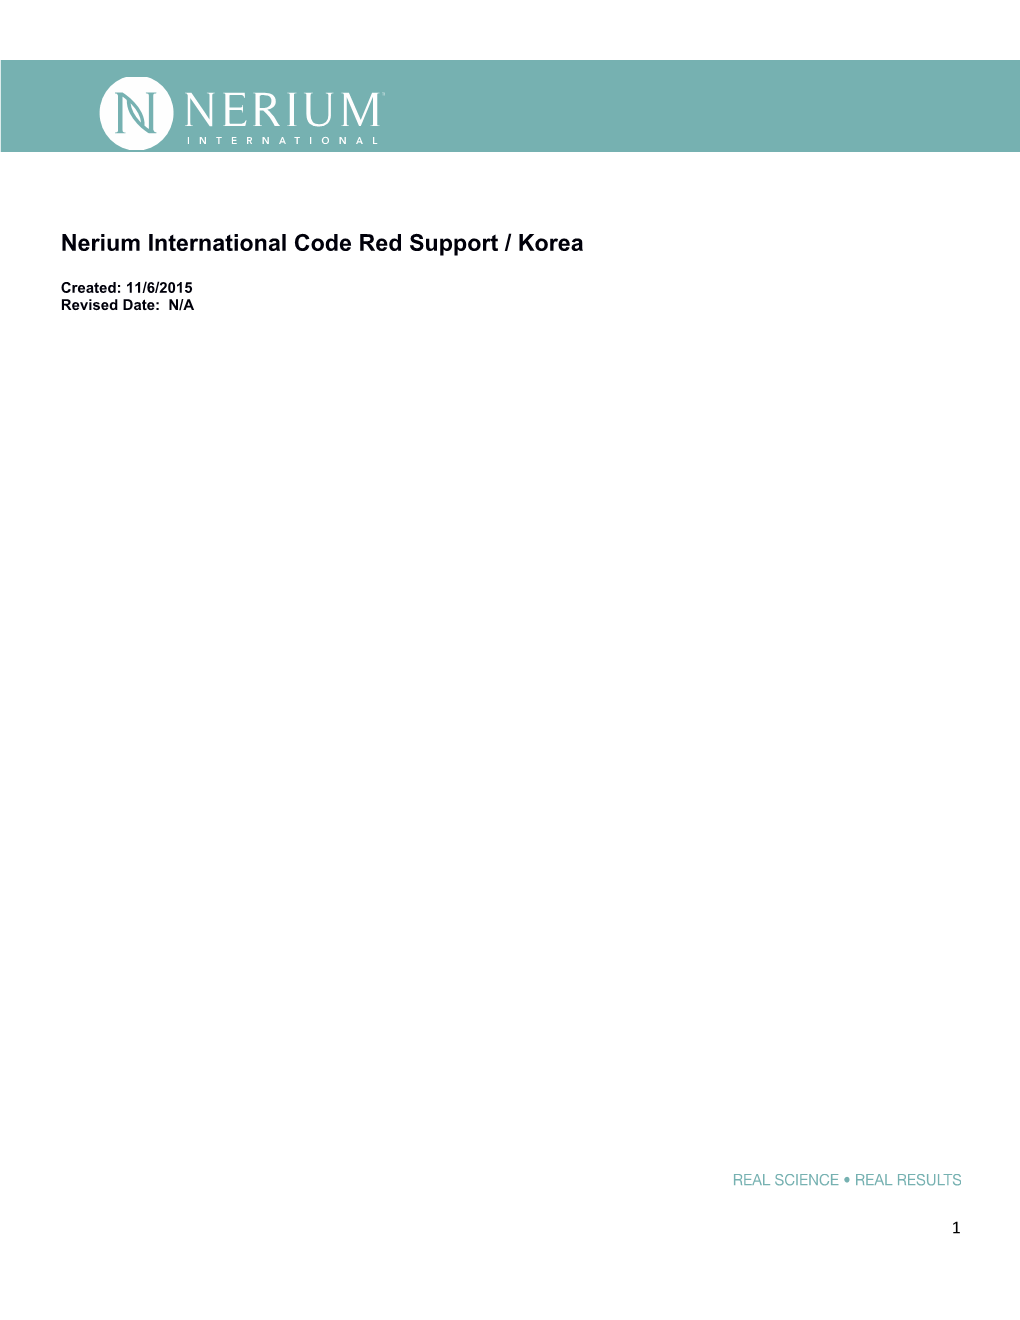 Nerium International Corporate Support / Korea